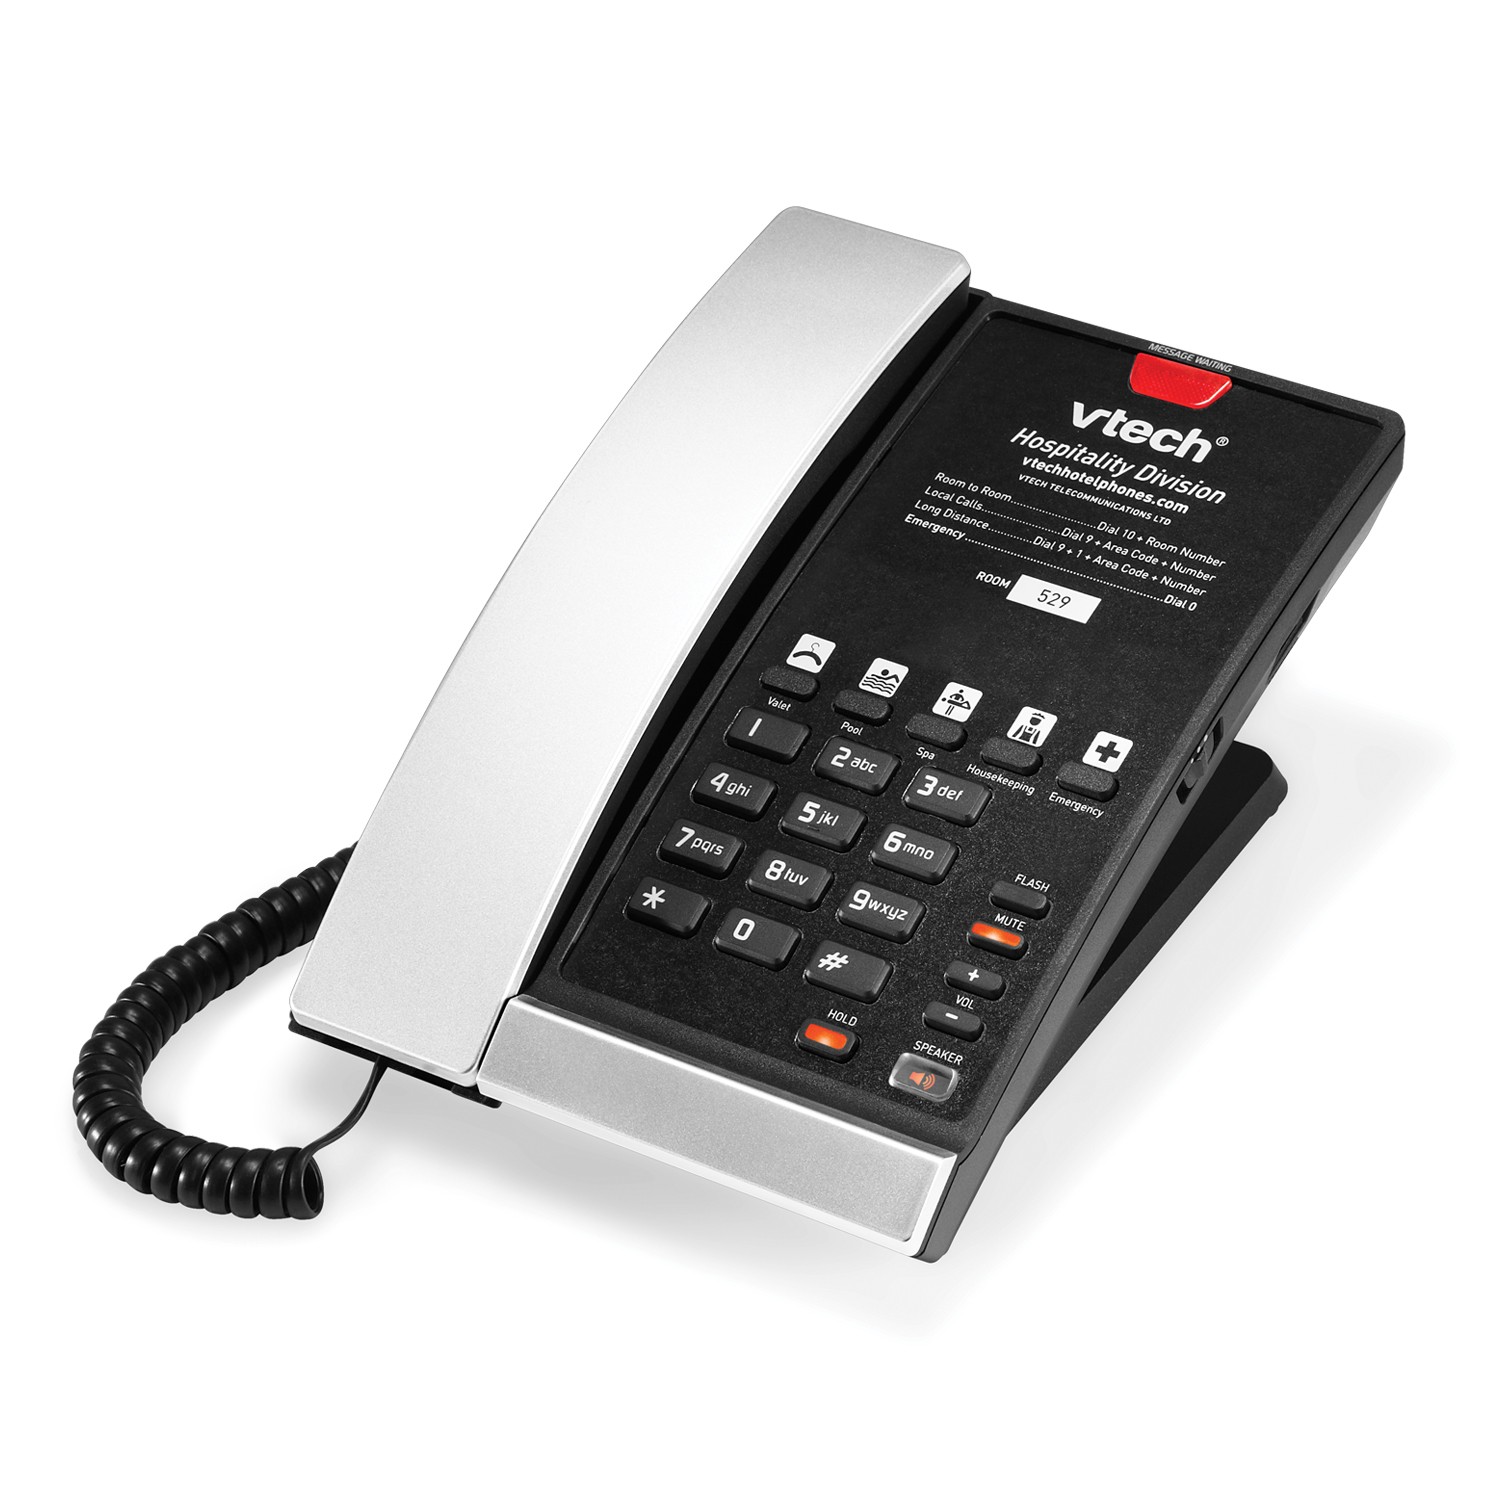 TELEPHONO A2210 1 LINEA DE TELEFONO CON CABLE ANALOGICO CONTEMPORANEO DE 0 3 5 O 10 MARCACIONES RAPIDAS ALTAVOZ - PLATA/NEGRO